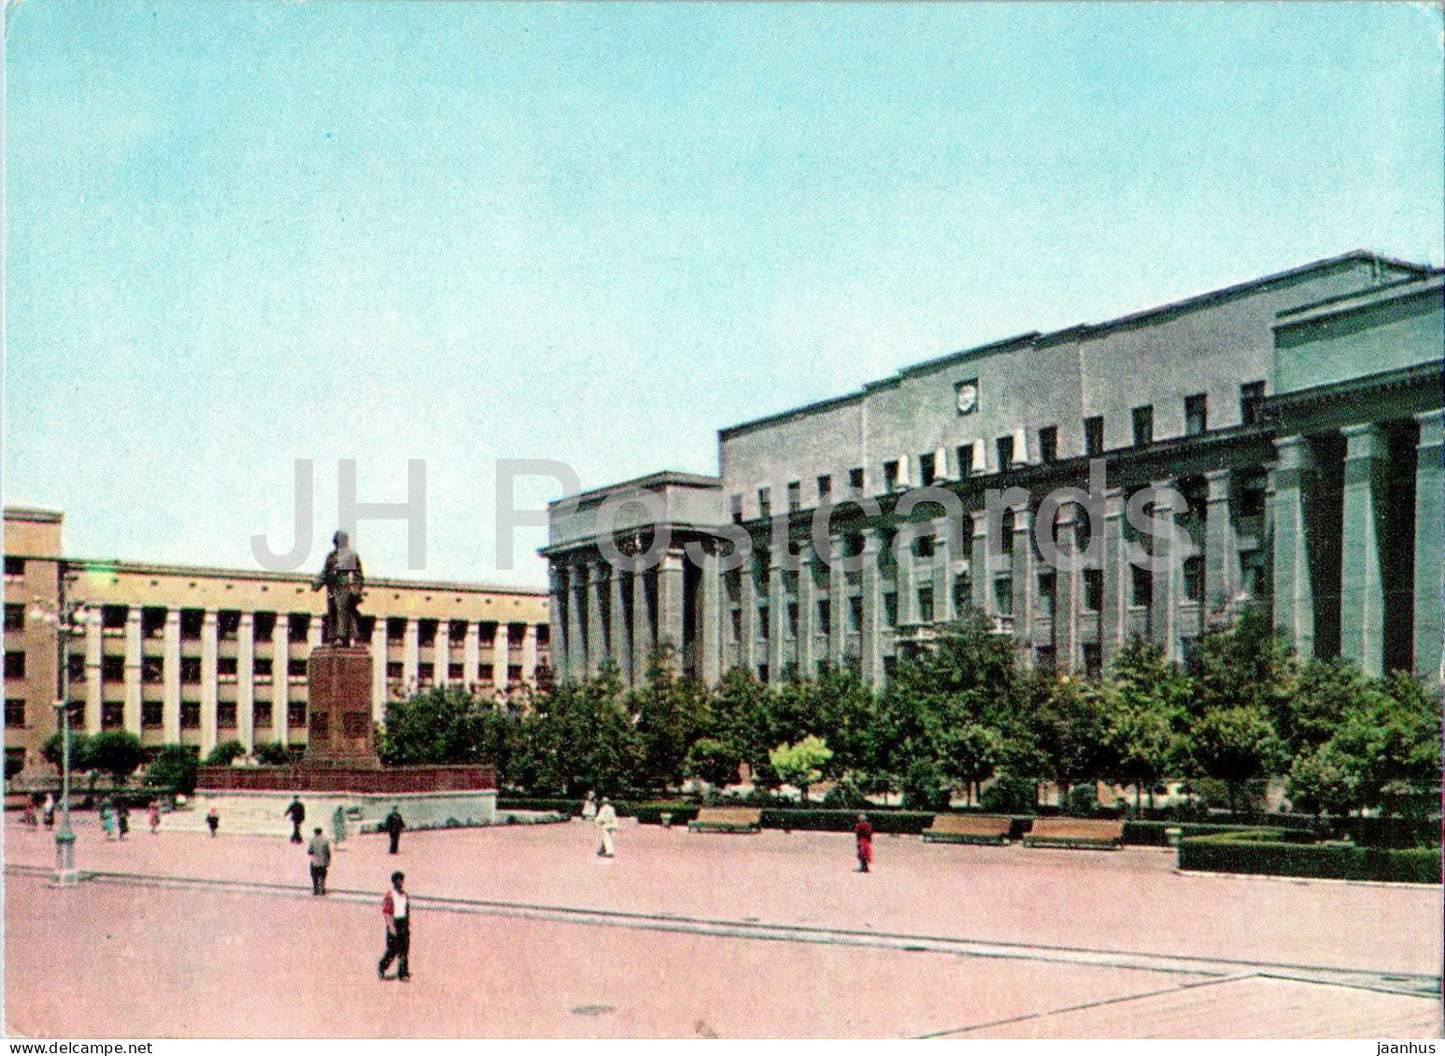 Vladikavkaz - Ordzhonikidze - Freedom Square - monument to Ordzhonikidze  - 1964 - Russia USSR - unused - JH Postcards